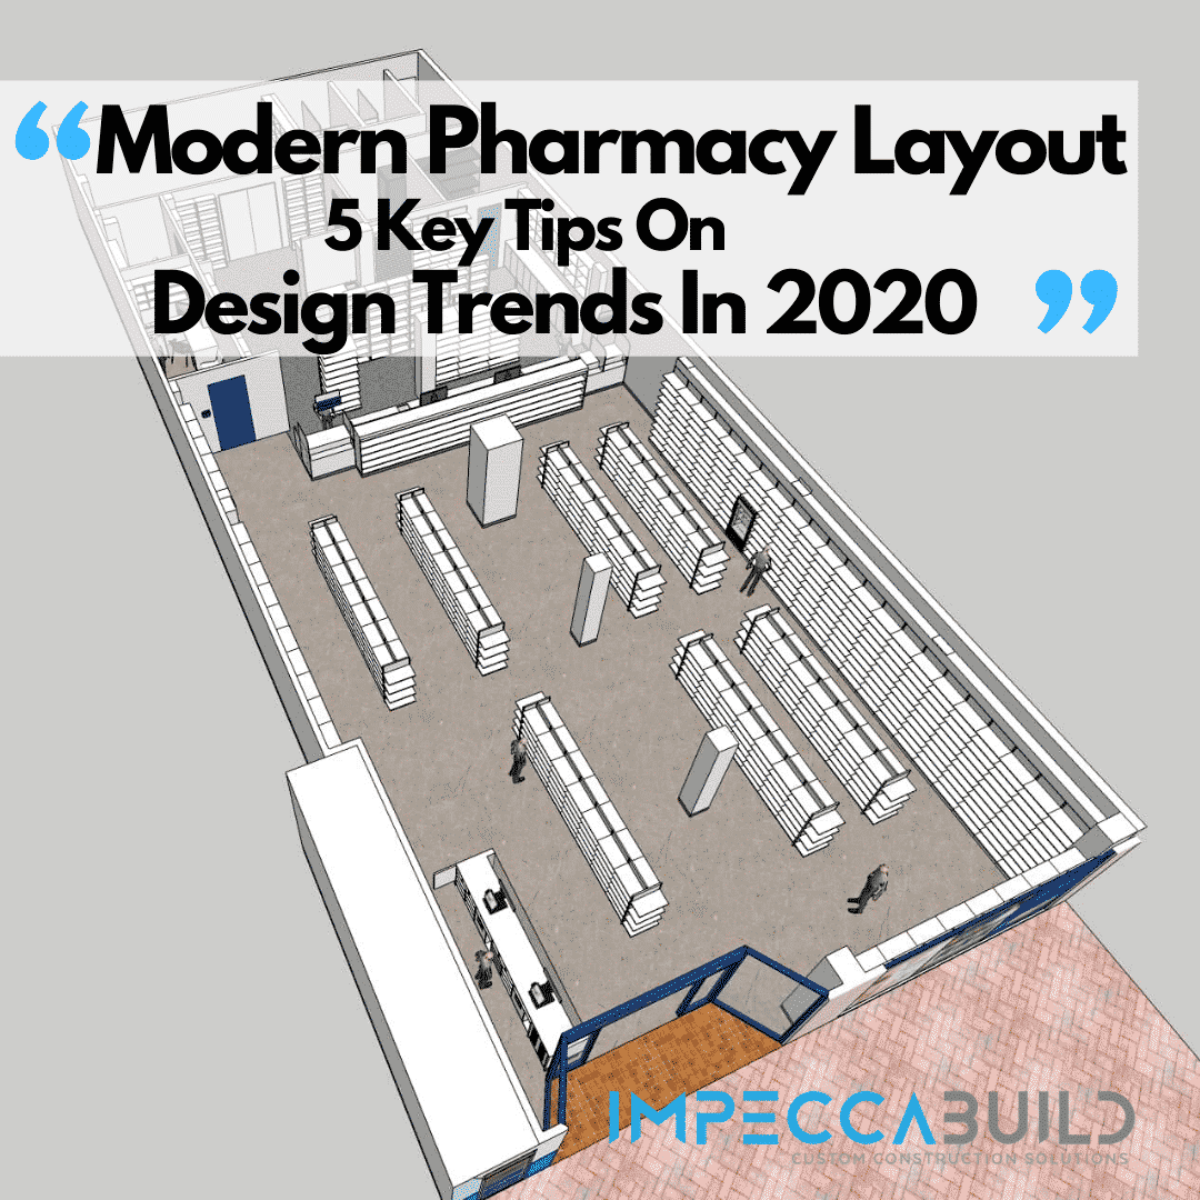 Retail Pharmacy Design